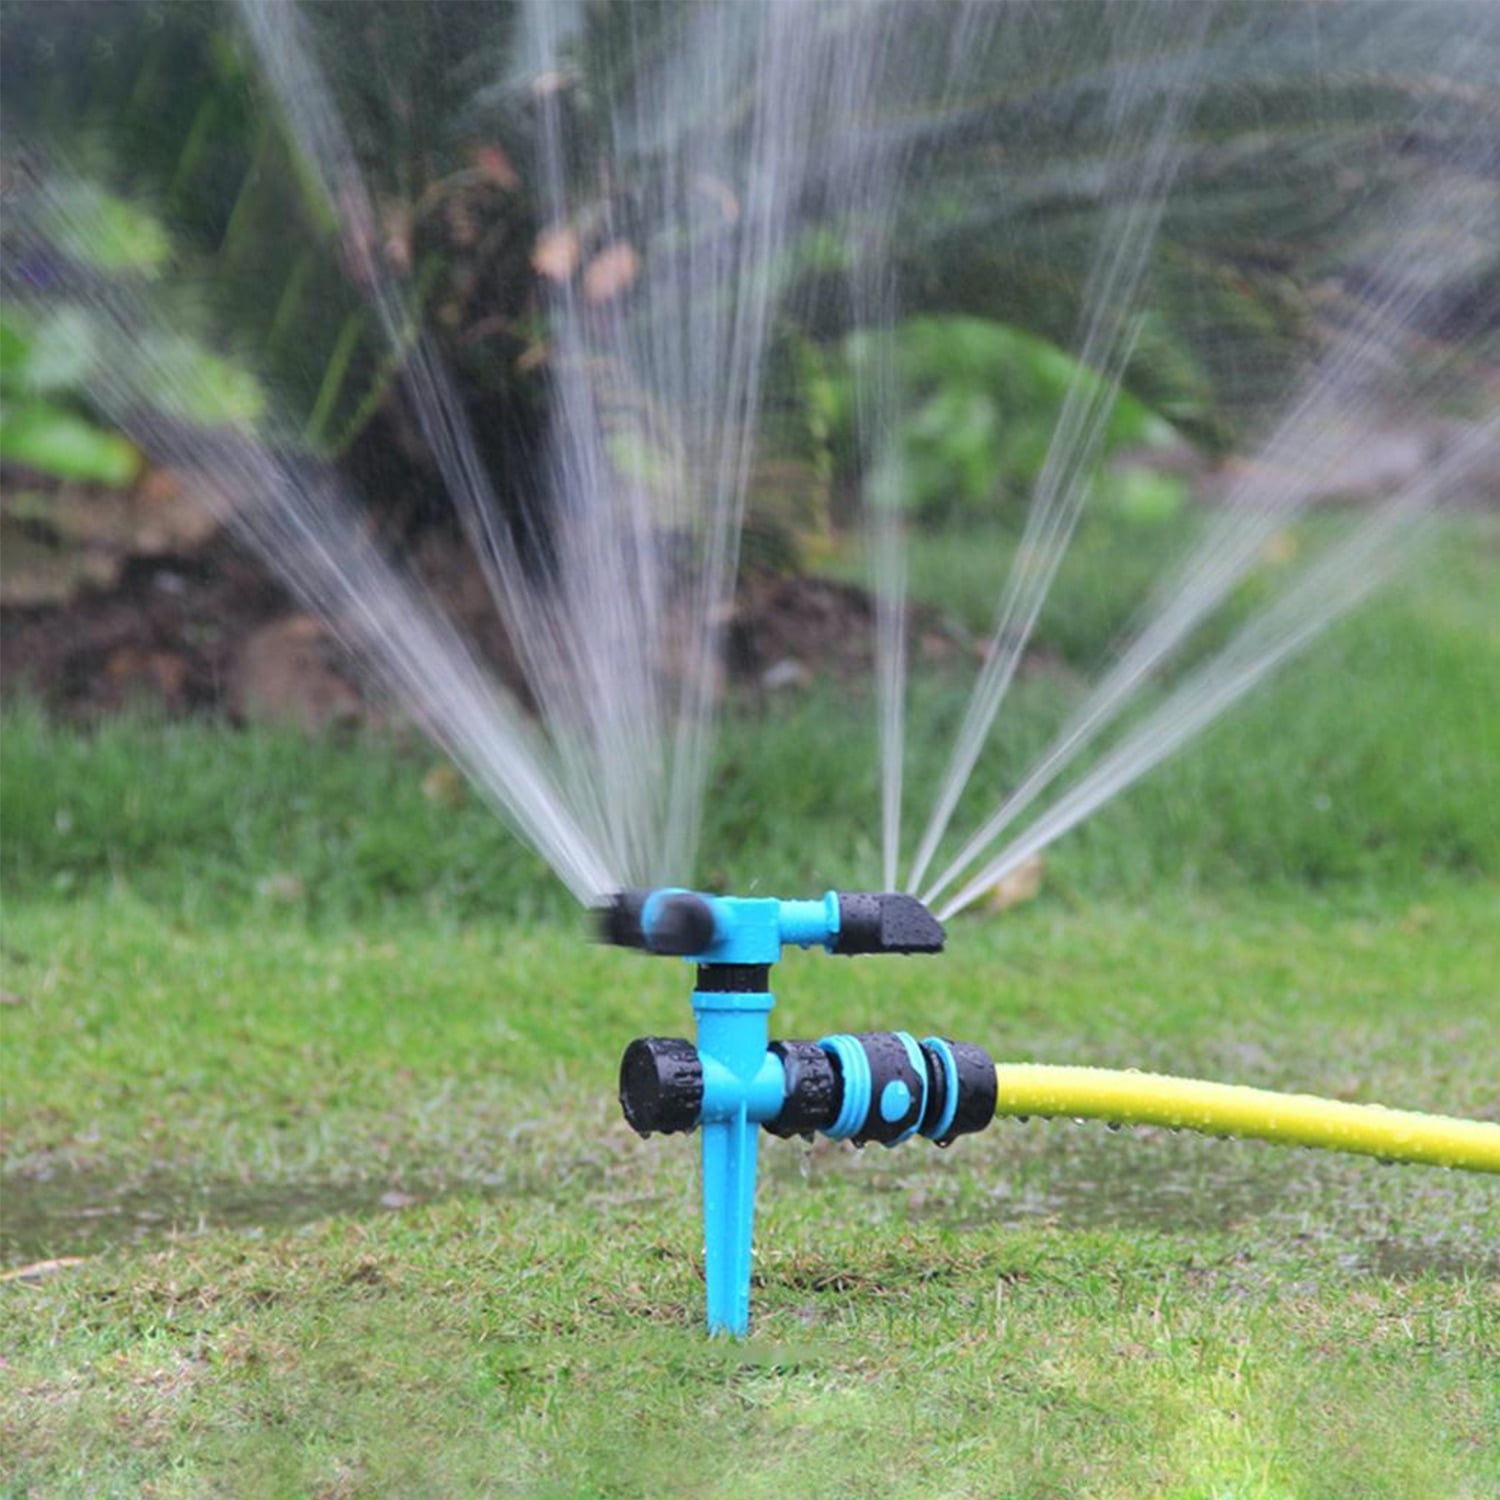 Garden Sprinkler Lawn Watering 360 Degree Rotating Water Hose Spray Irrigation 